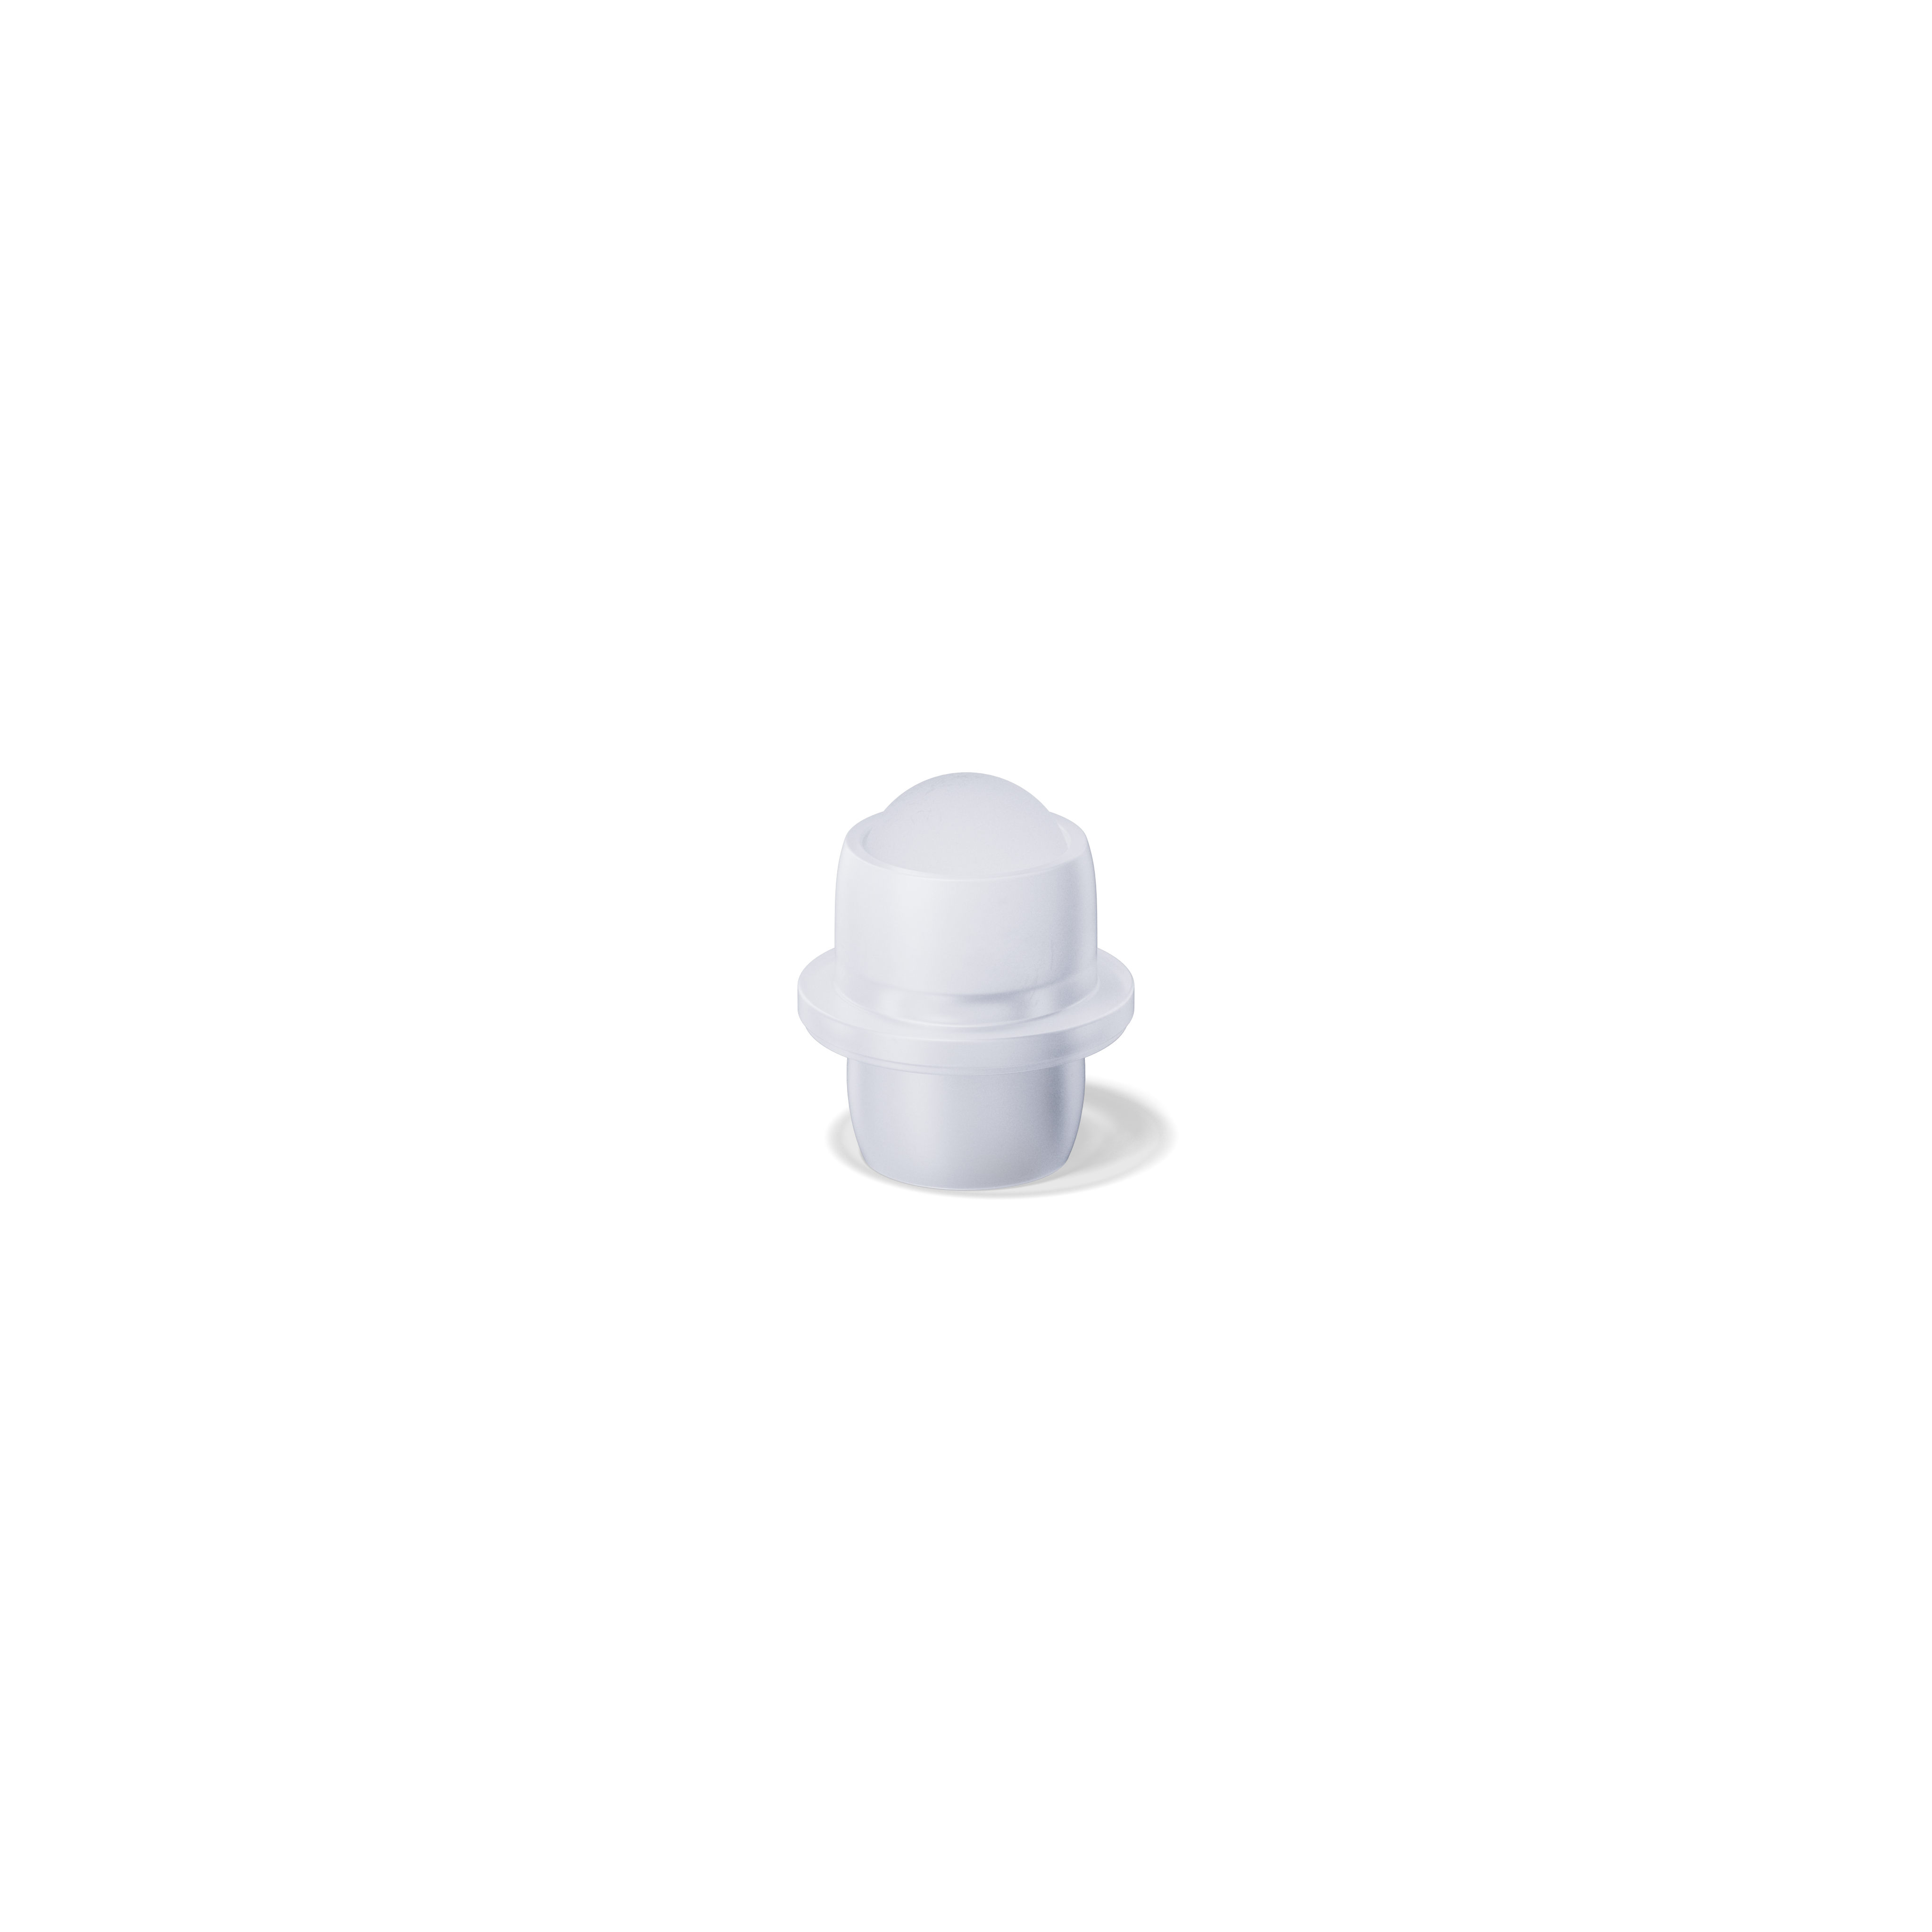 Roll-on cap DIN18, PP, natural fitment, white matte plastic ball, black cap (Orion)